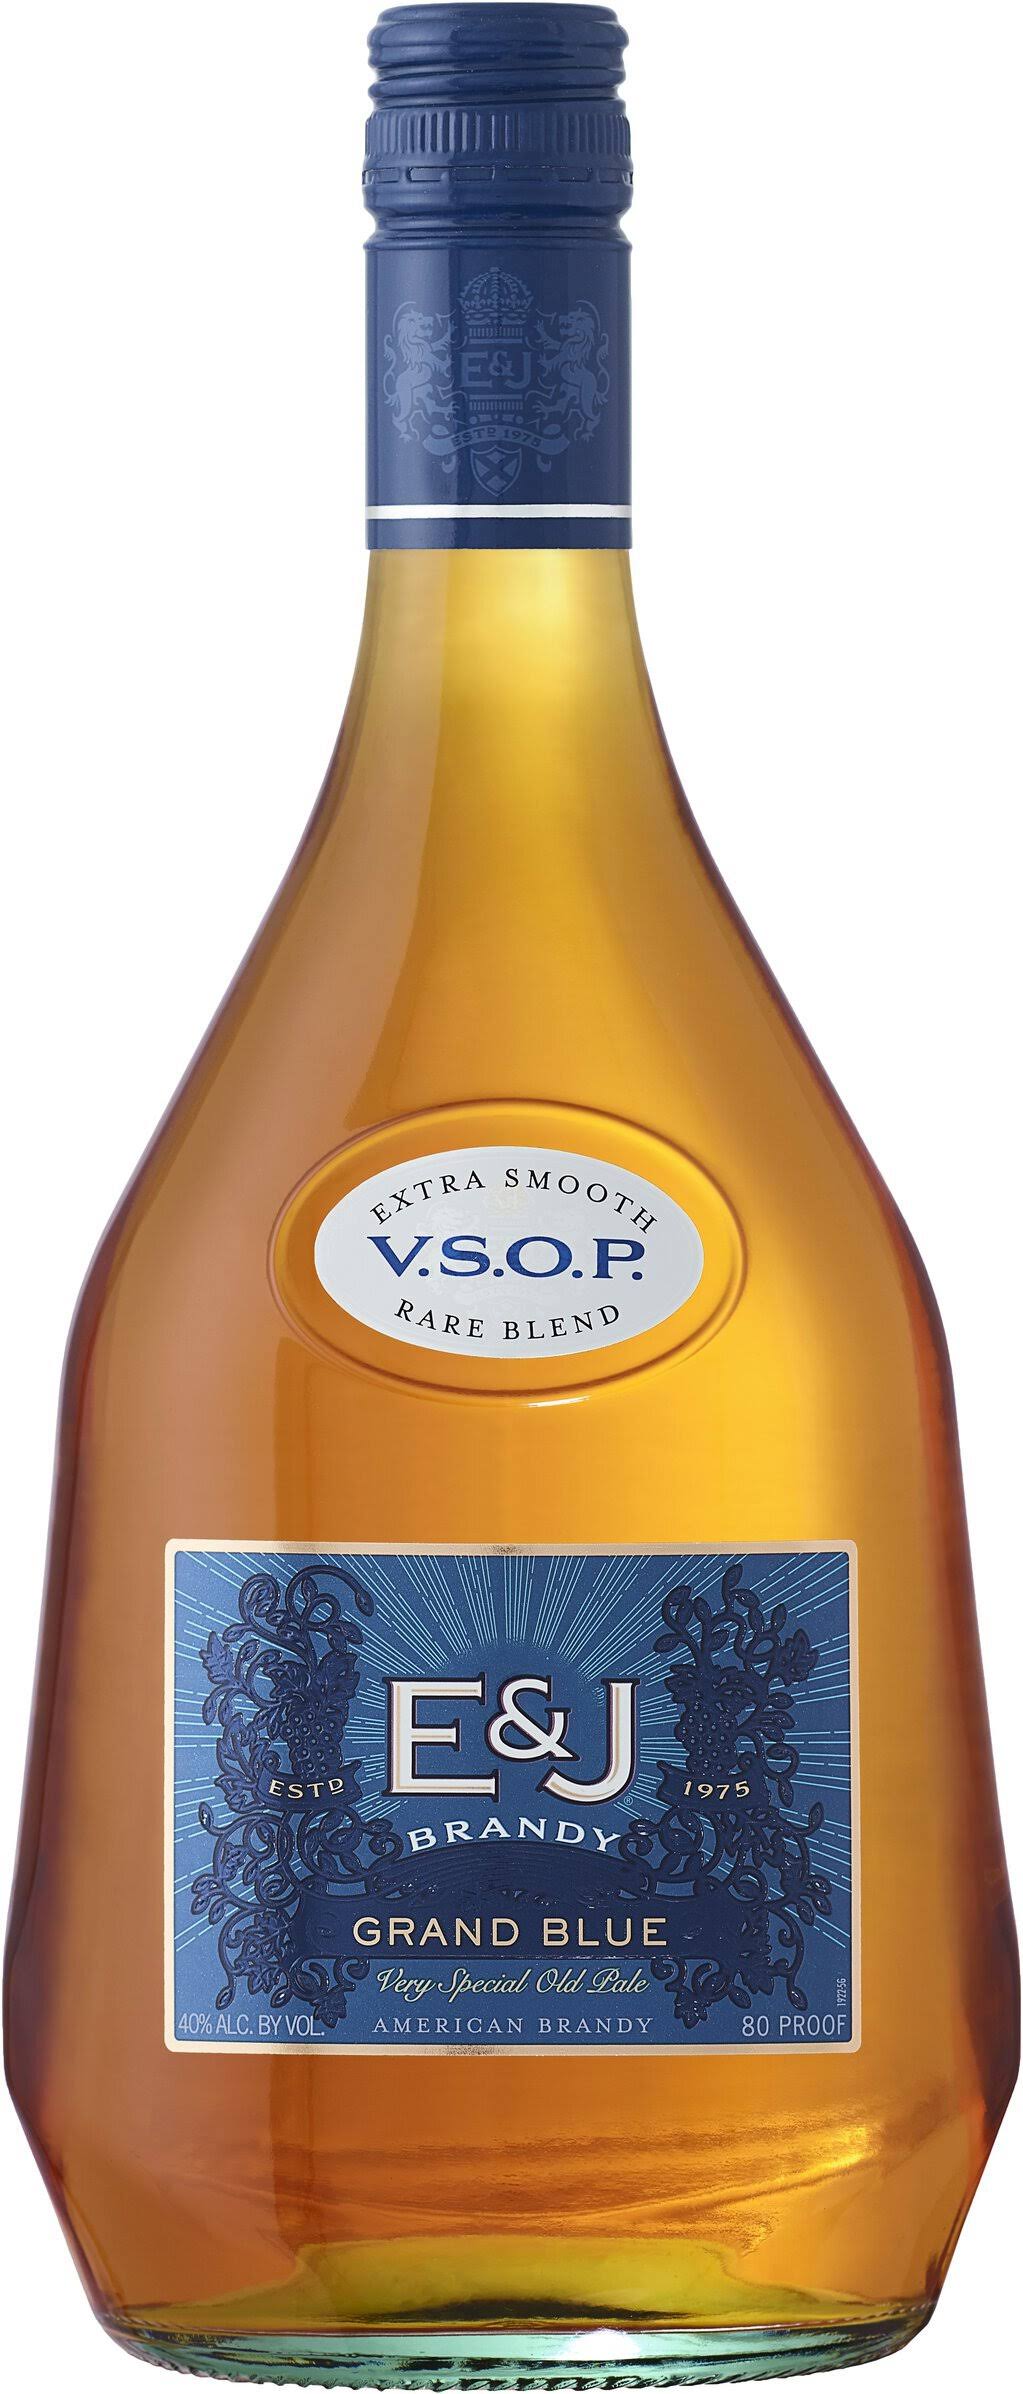 E & J VSOP Brandy, Superior Reserve - 750 ml